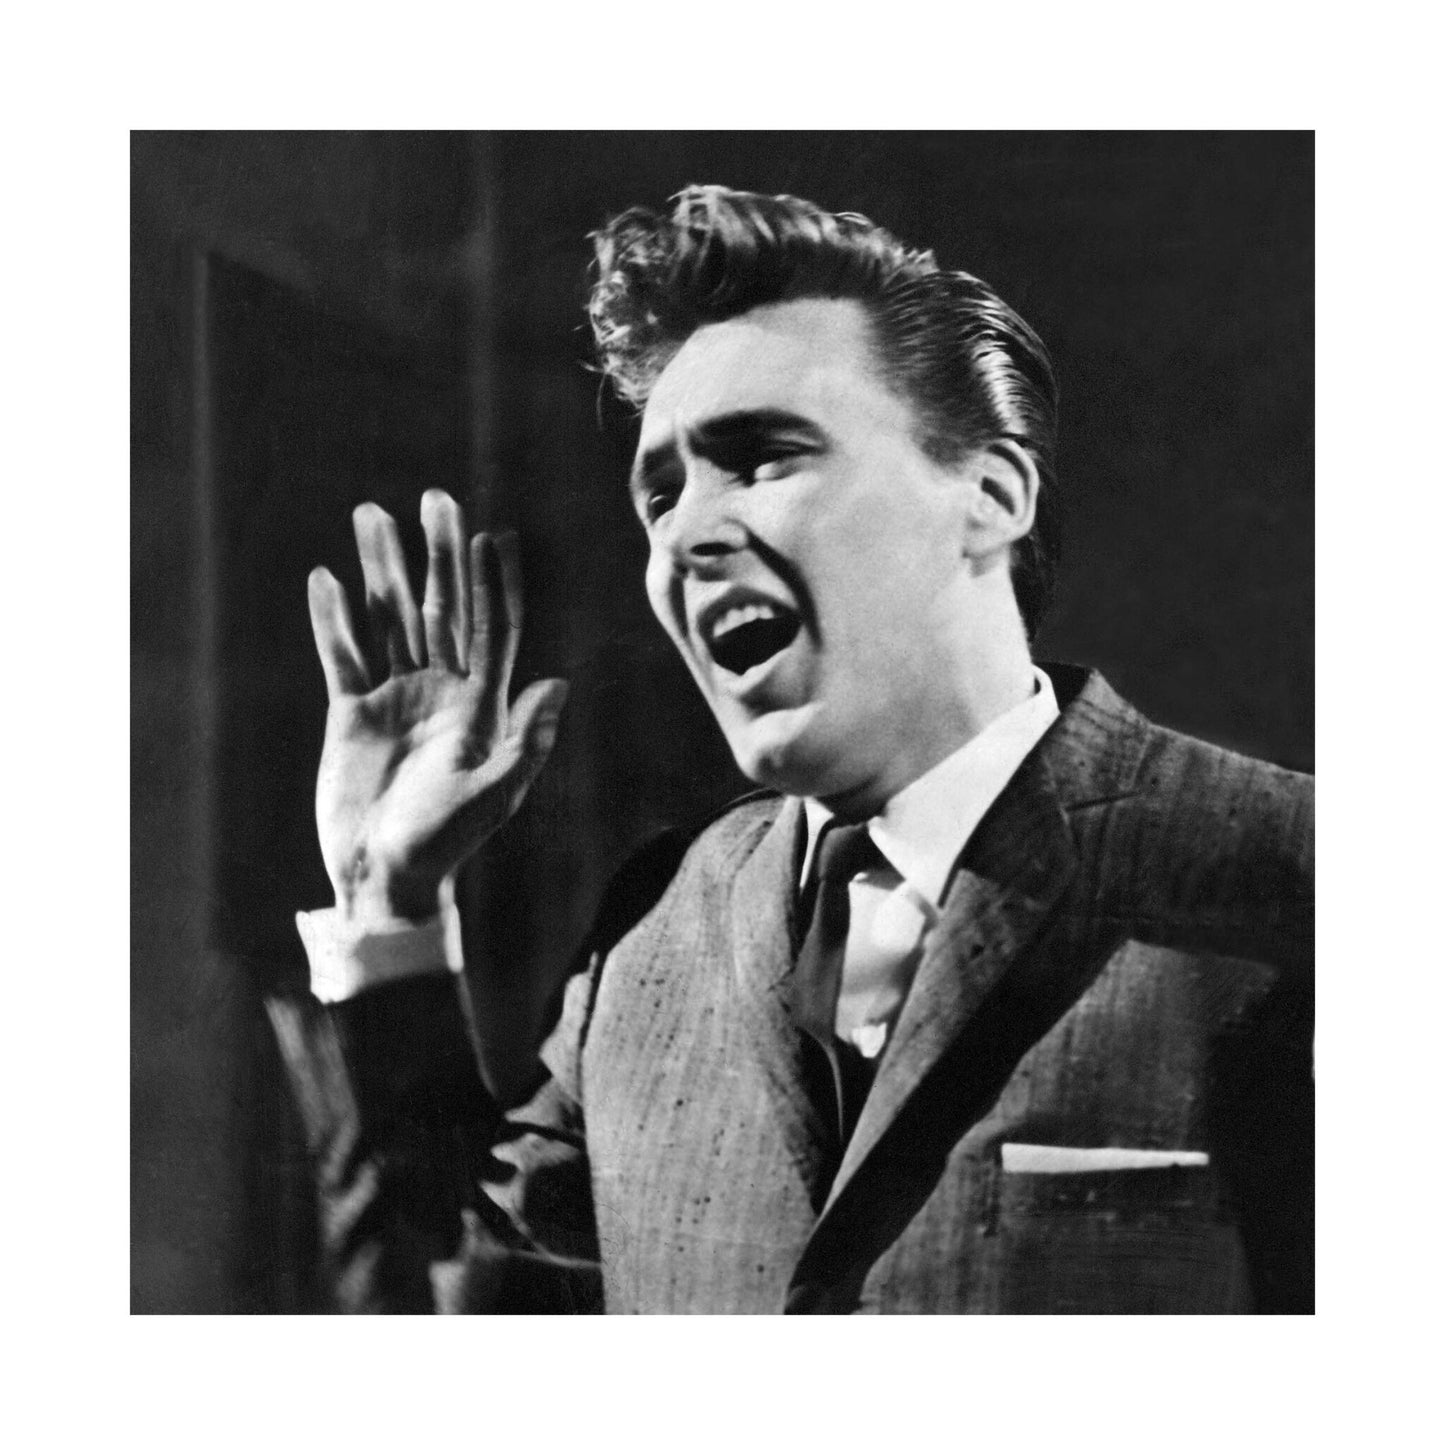 Billy Fury - Singing Live, England, 1963 Print